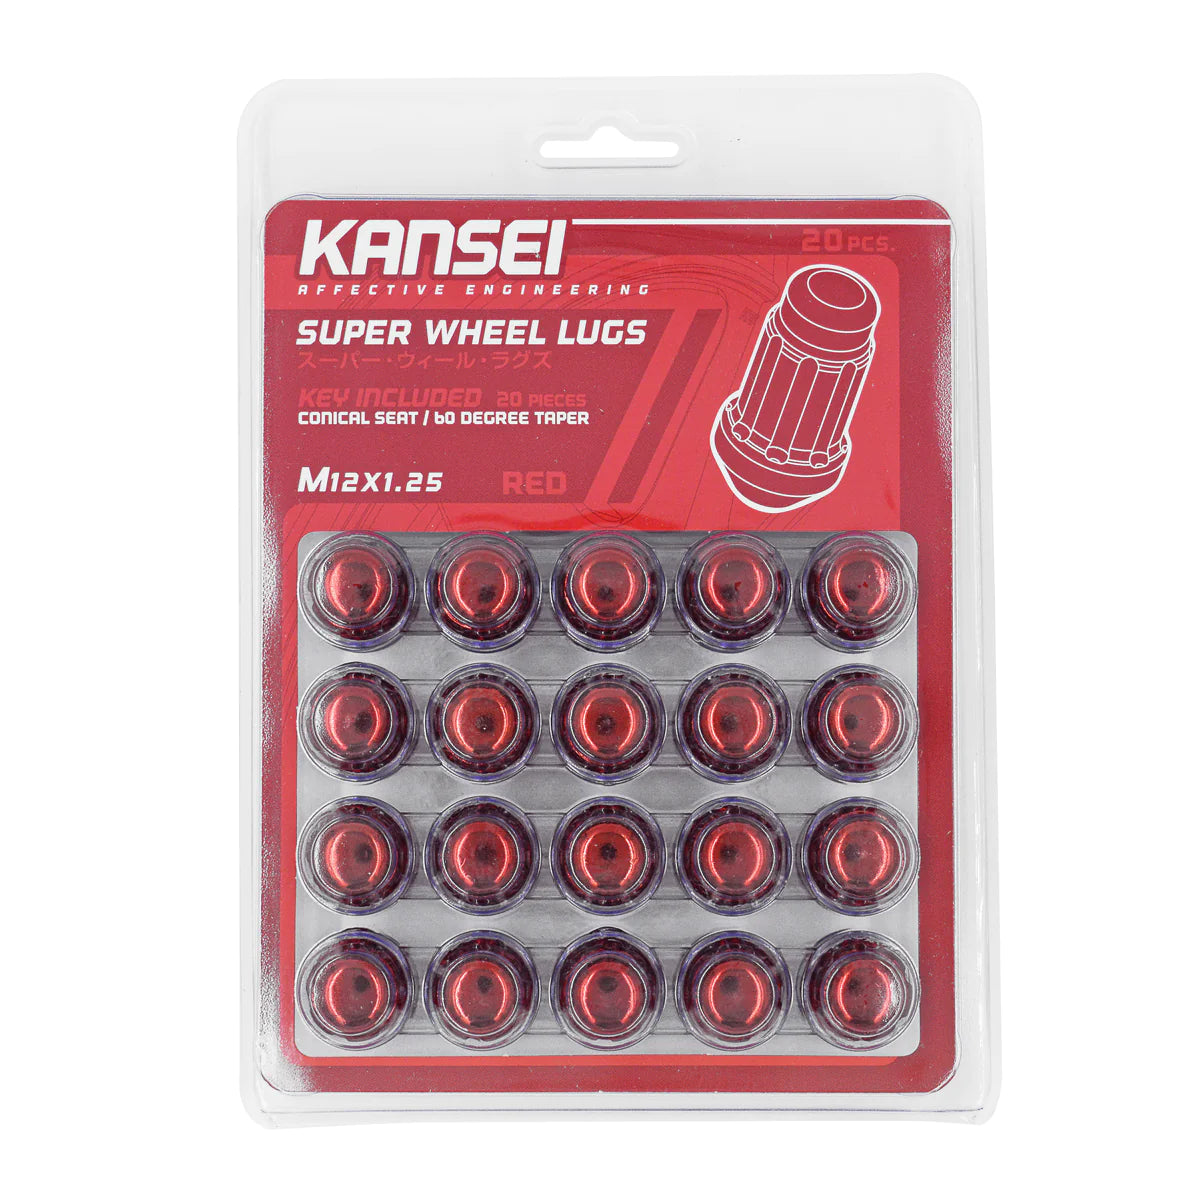 Kansei Lug Nuts - Red - 12x1.25